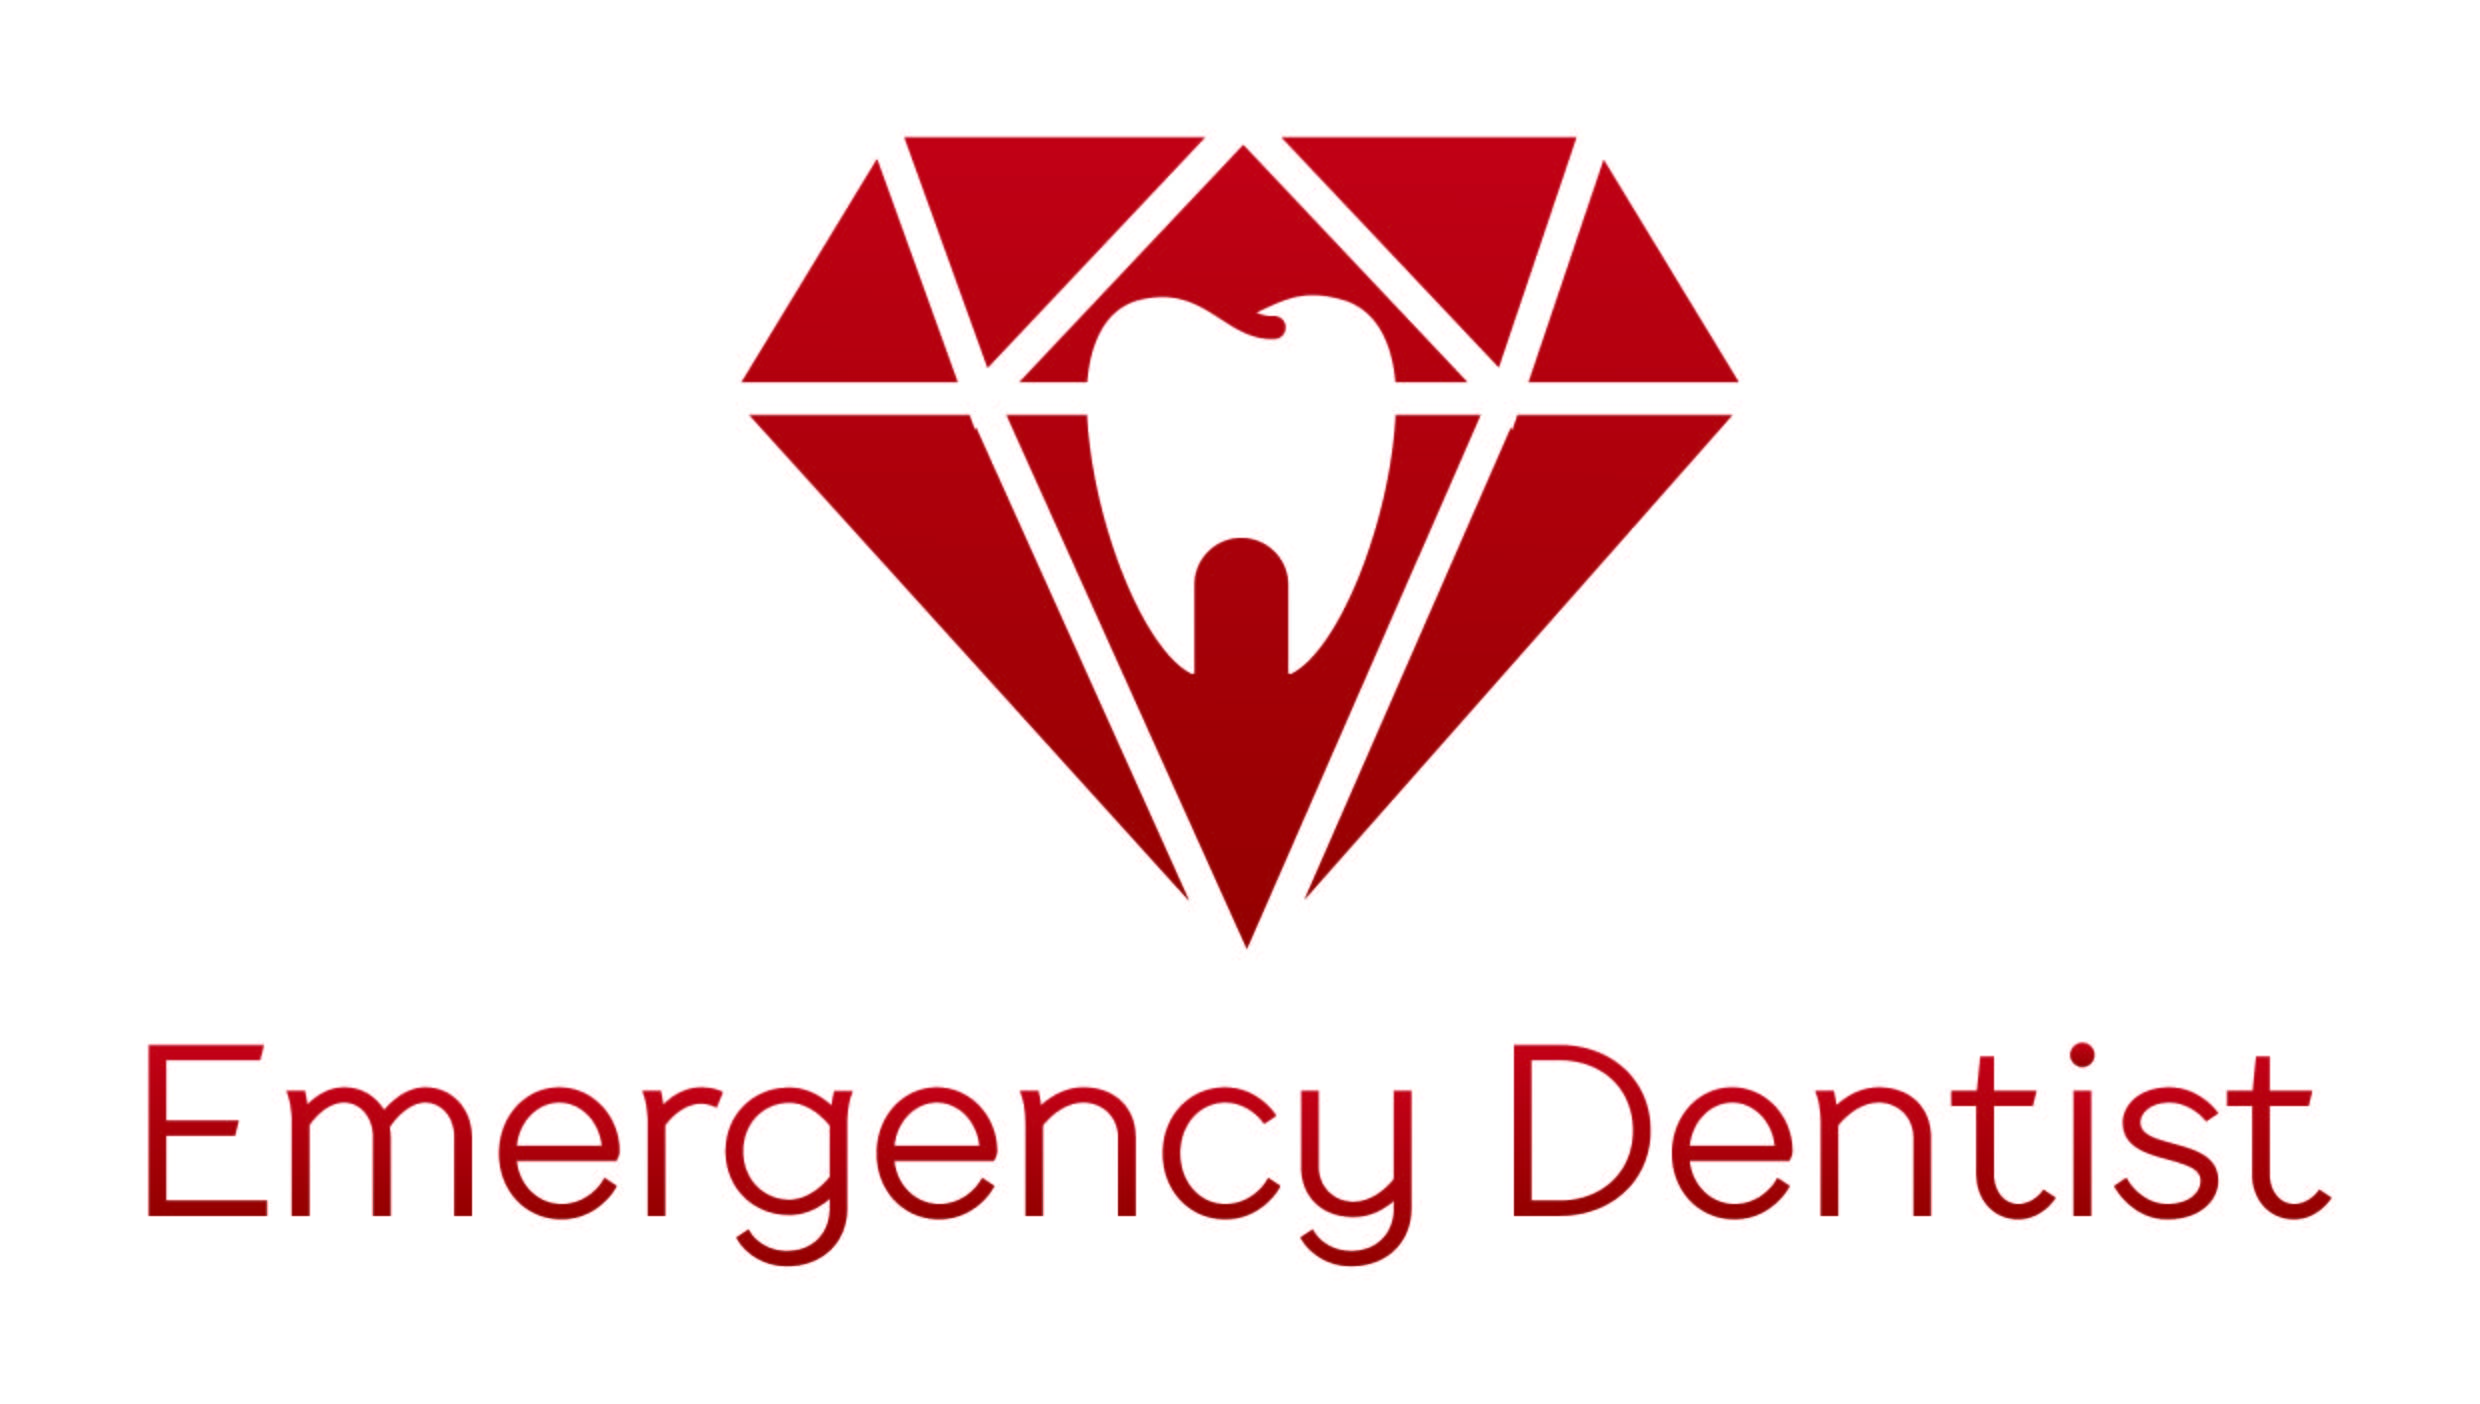 Emergency Dentist London Logo